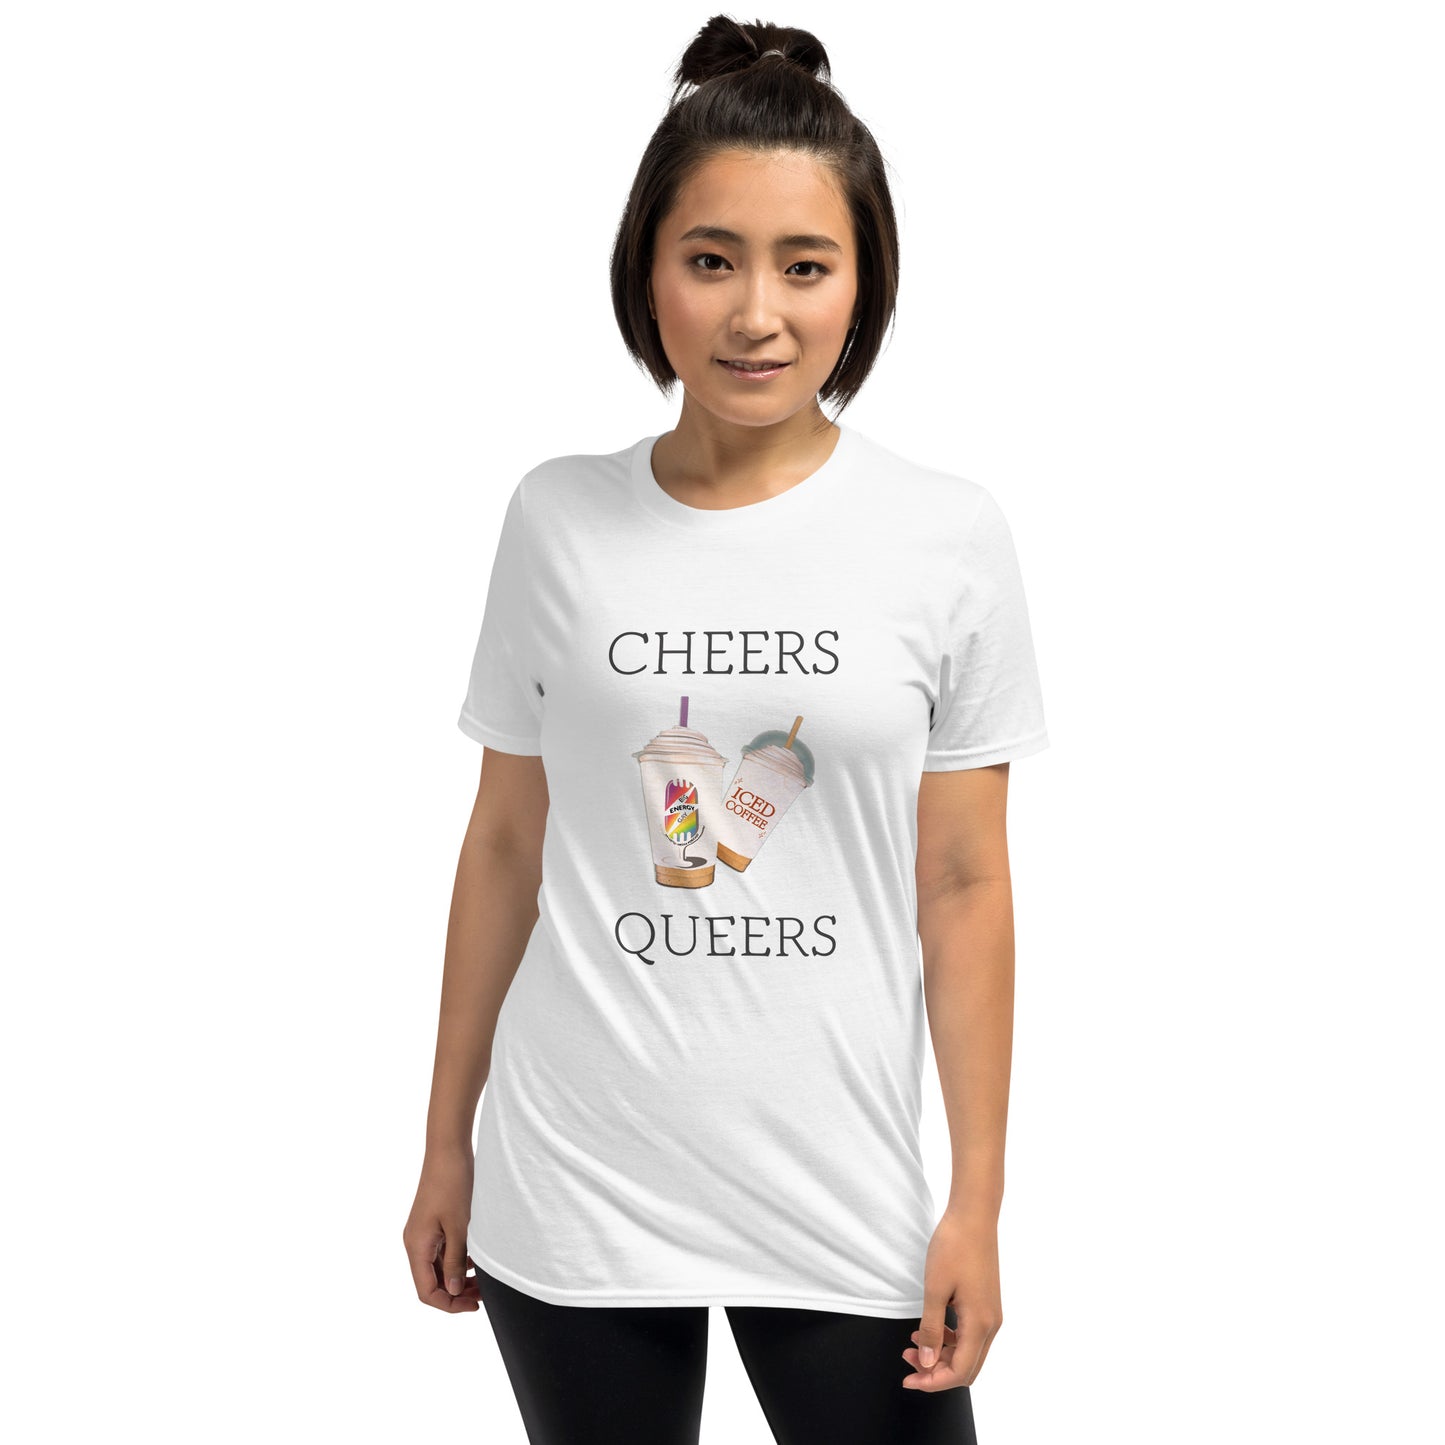 Cheers Queers Short-Sleeve Unisex T-Shirt